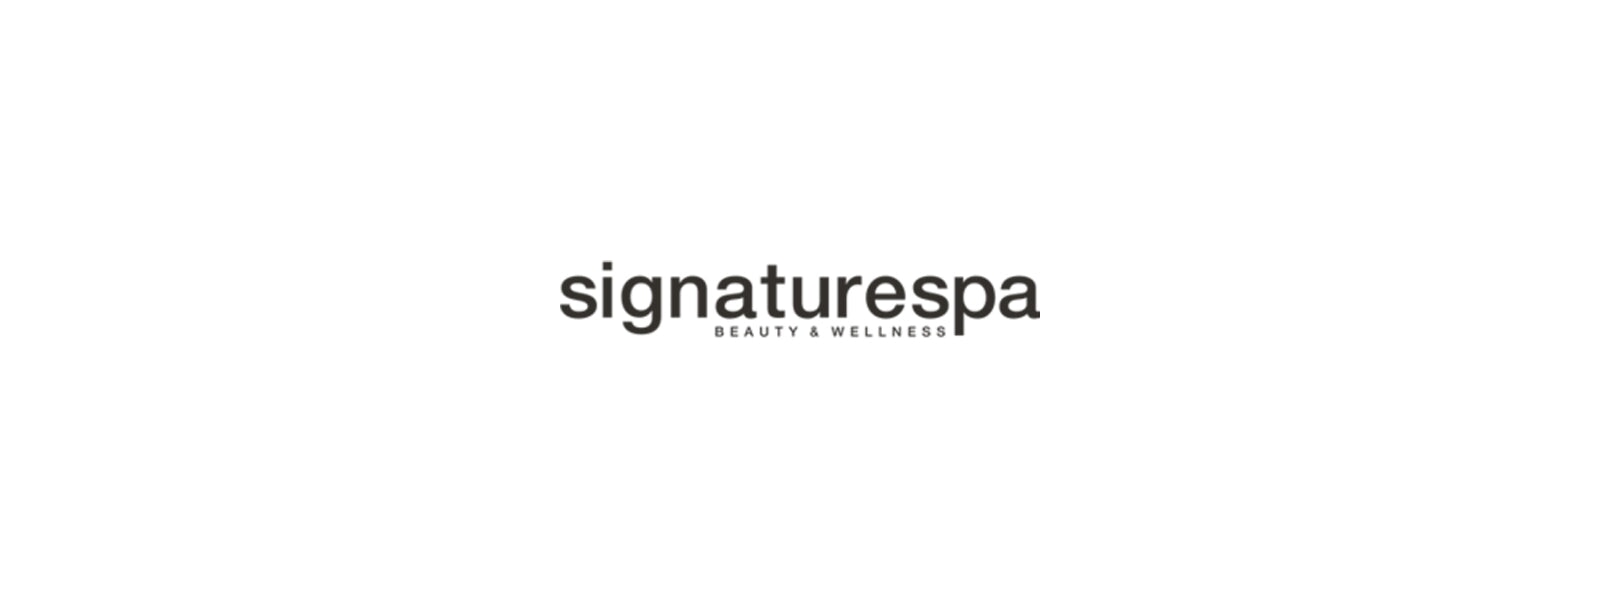 Signature Spa Beauty & Wellness – Synthesis genesis